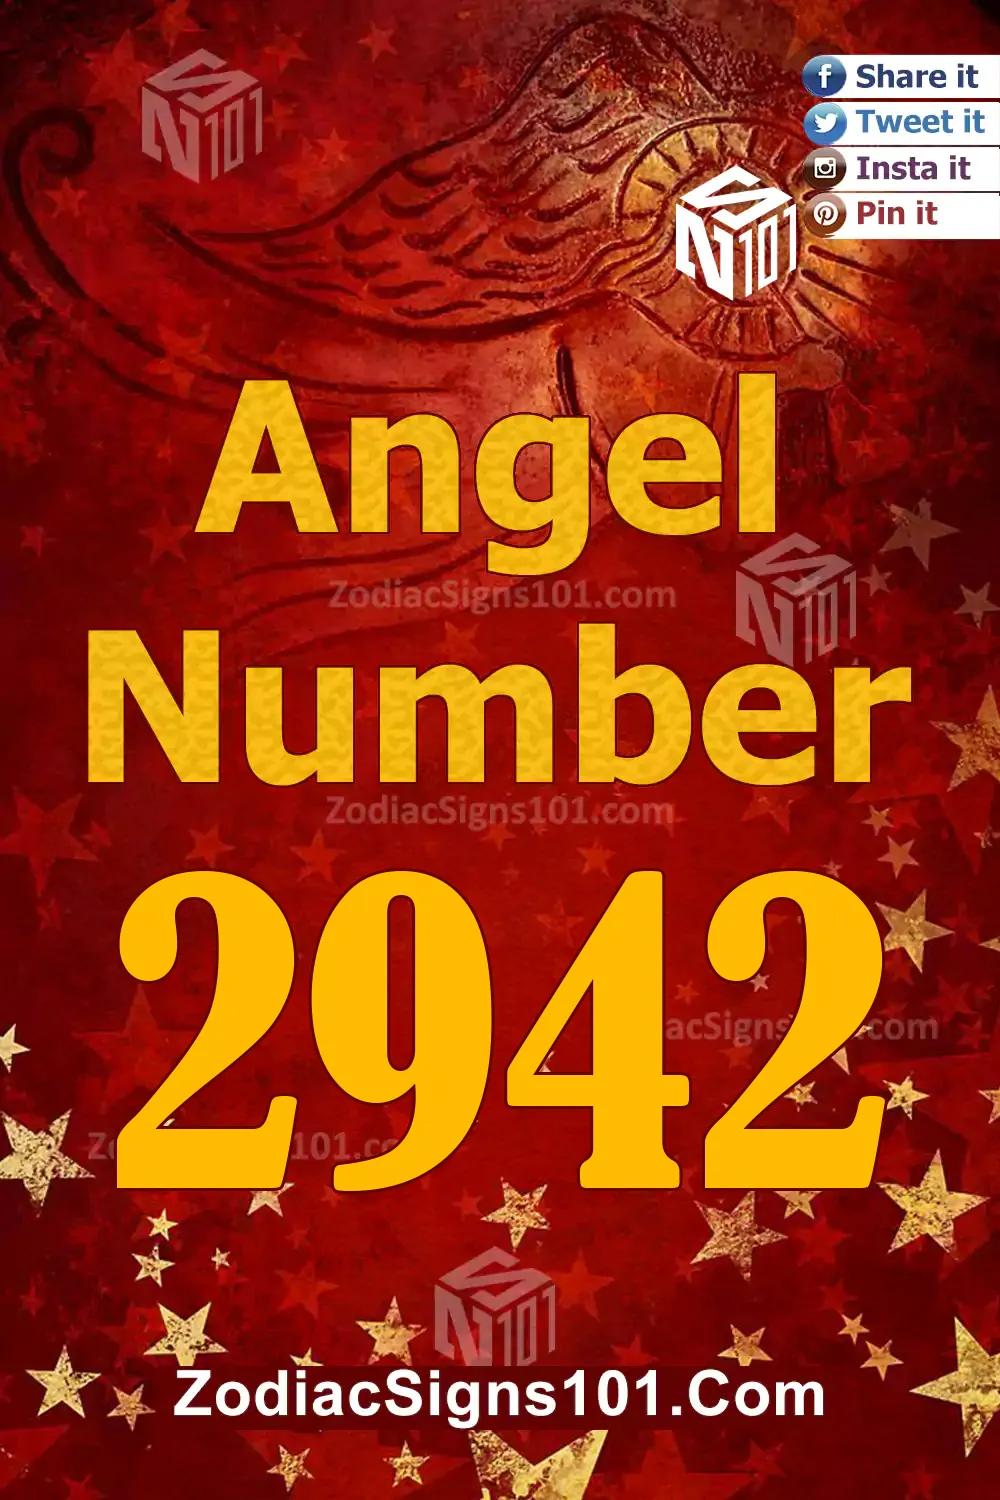 2942-Angel-Number-Meaning.jpg